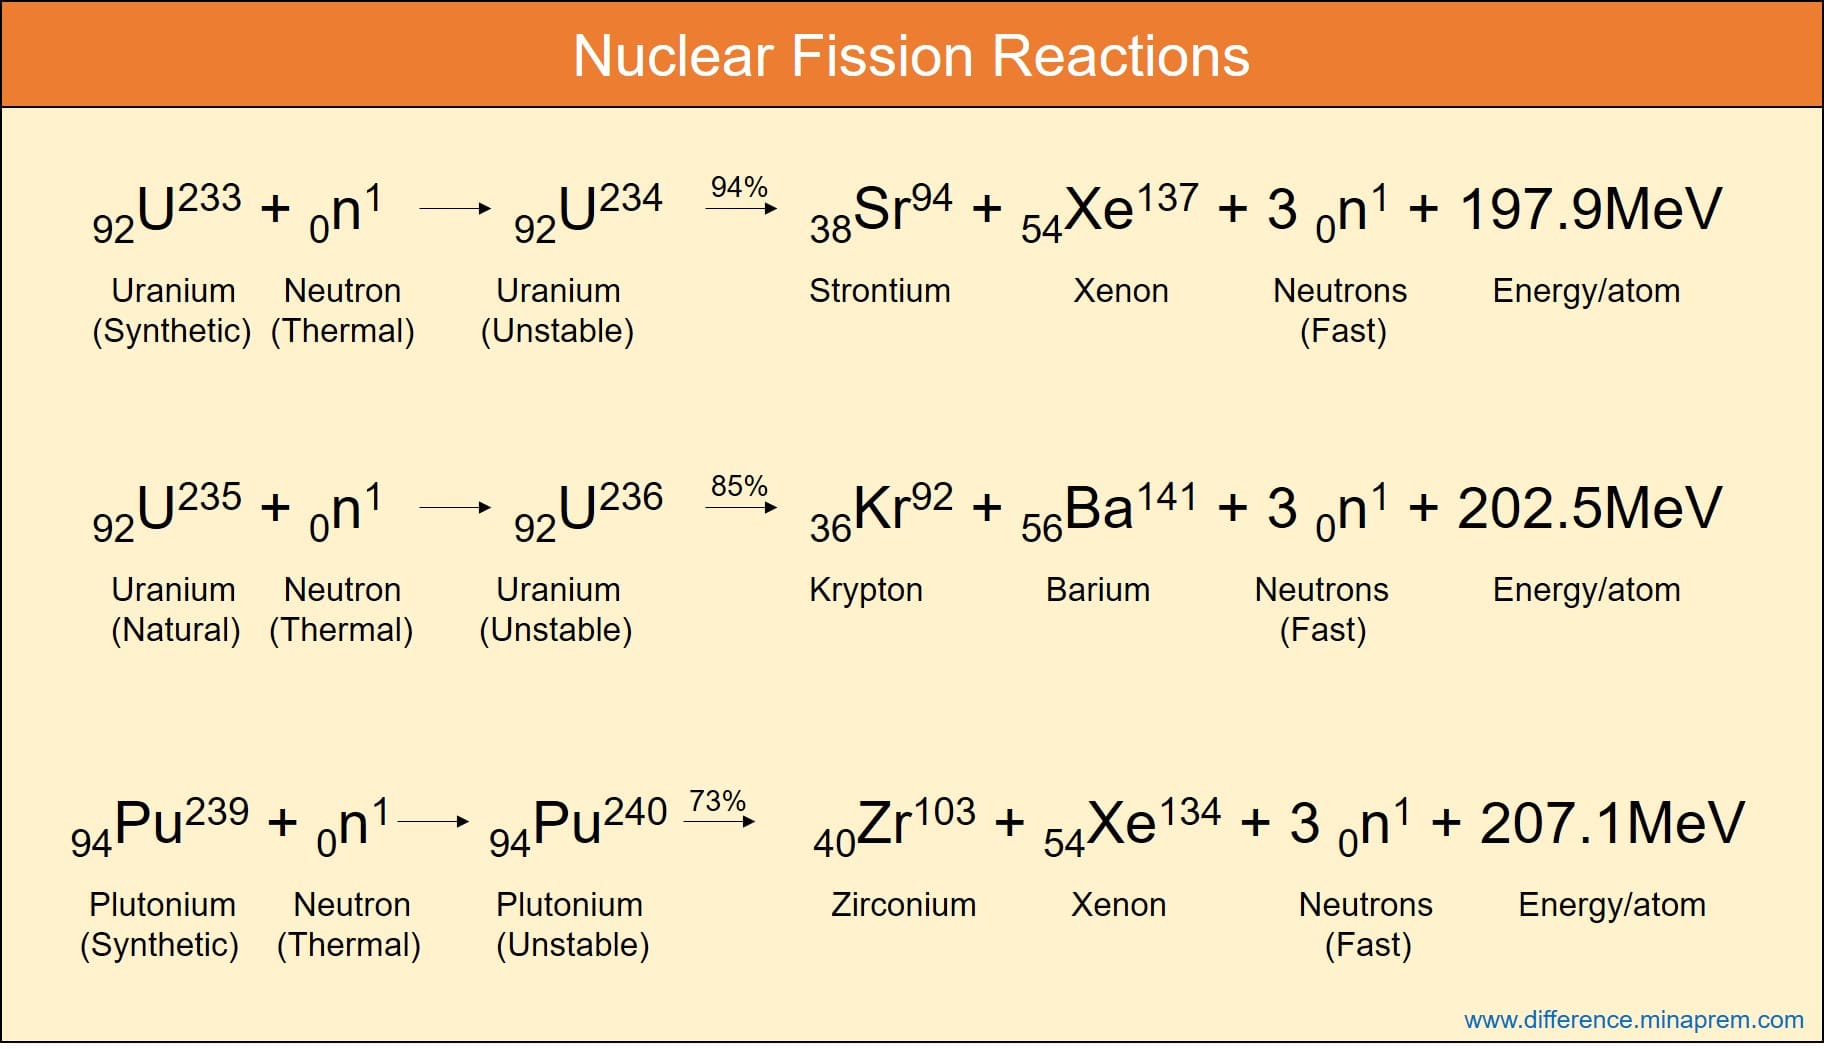 fusion vs fission power plant